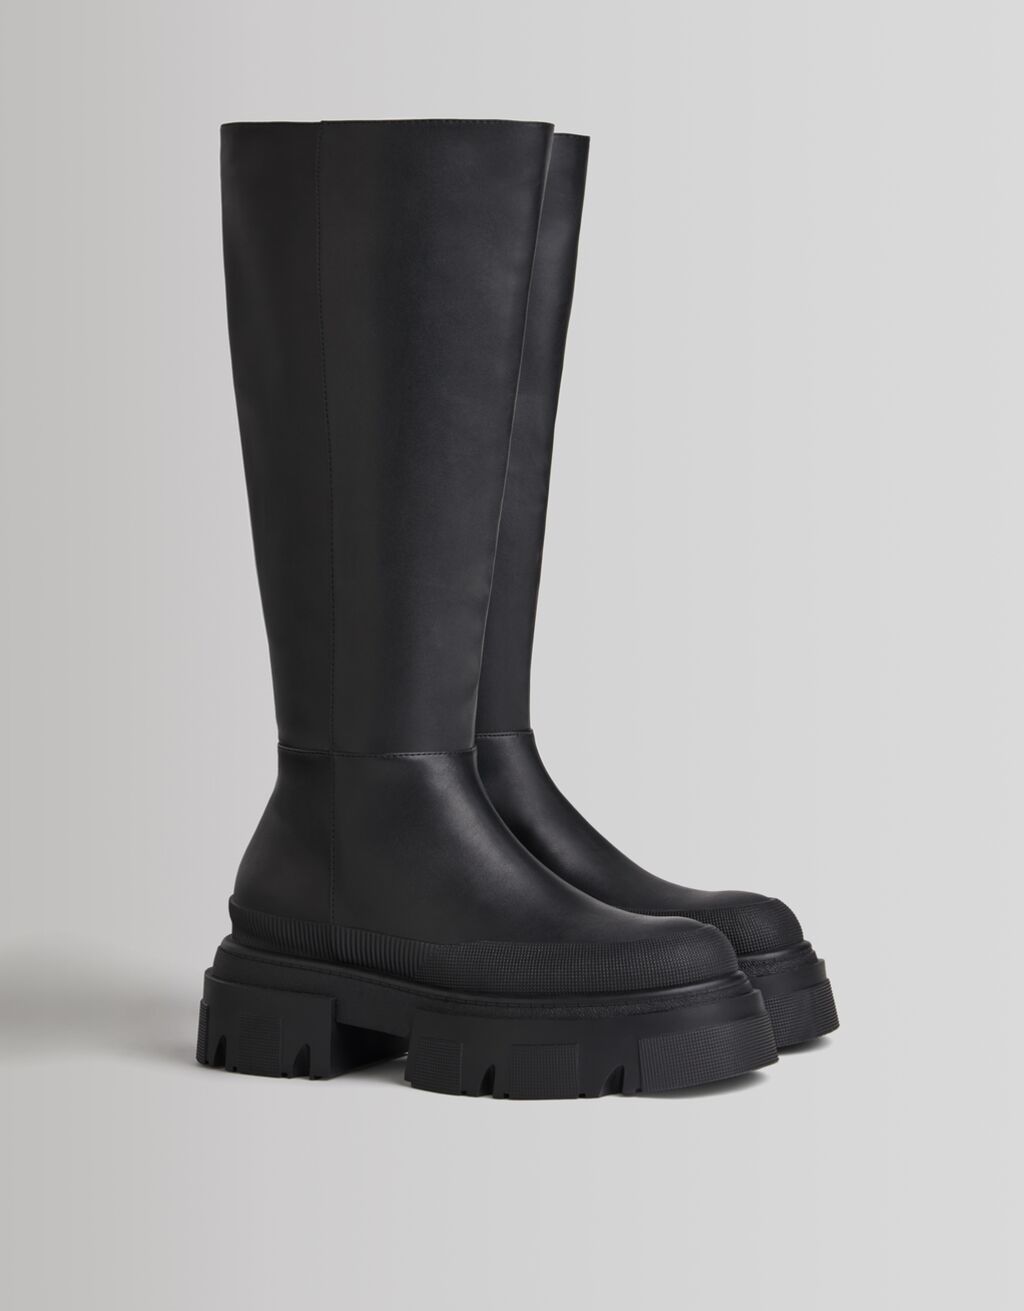 Platform boots with track soles, £59.99, Bershka